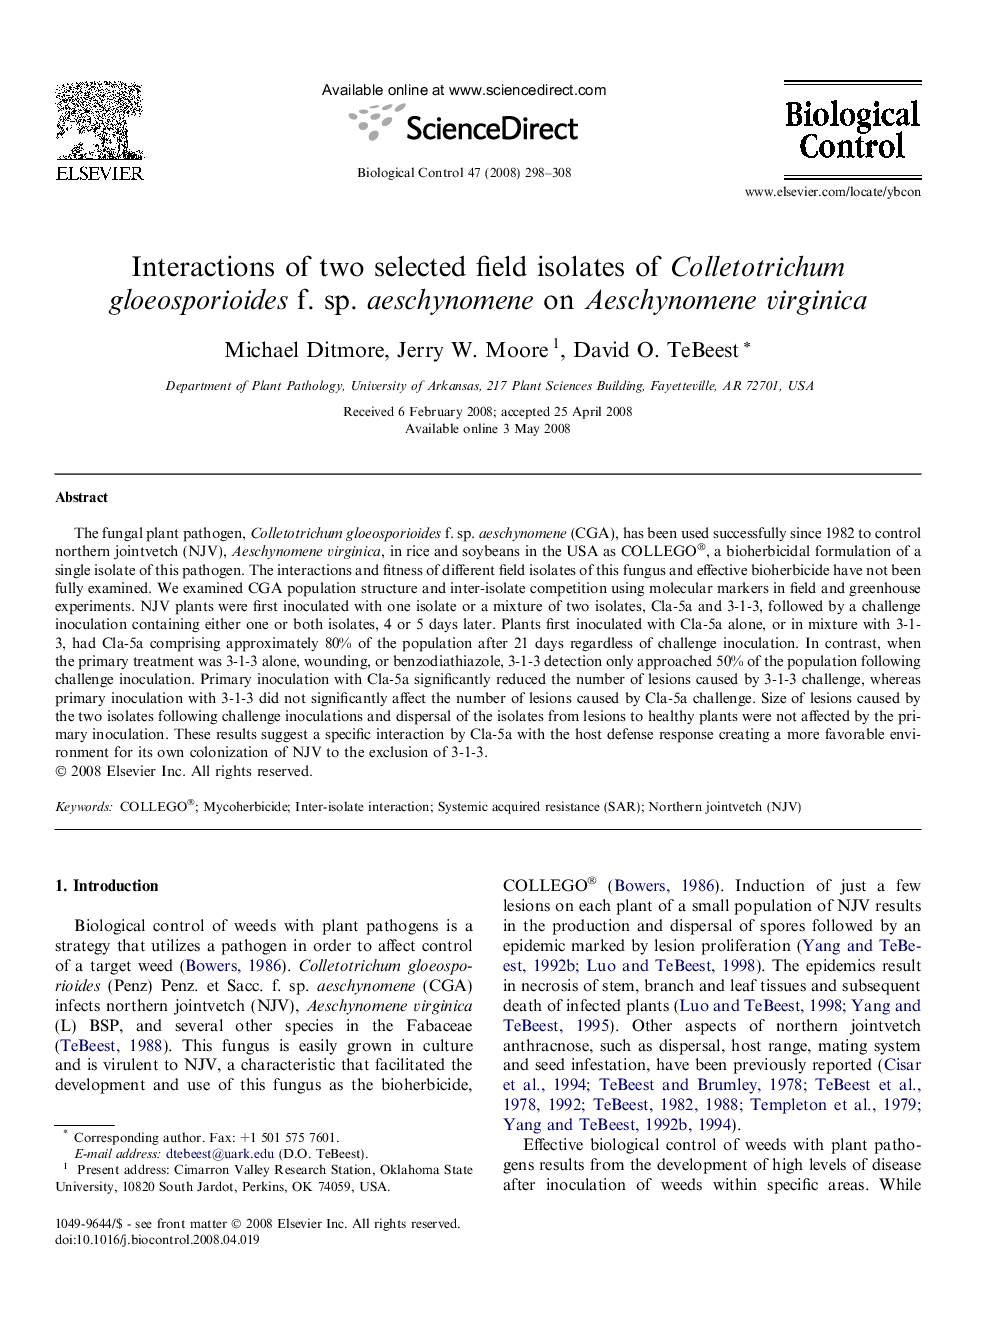 Interactions of two selected field isolates of Colletotrichum gloeosporioides f. sp. aeschynomene on Aeschynomene virginica